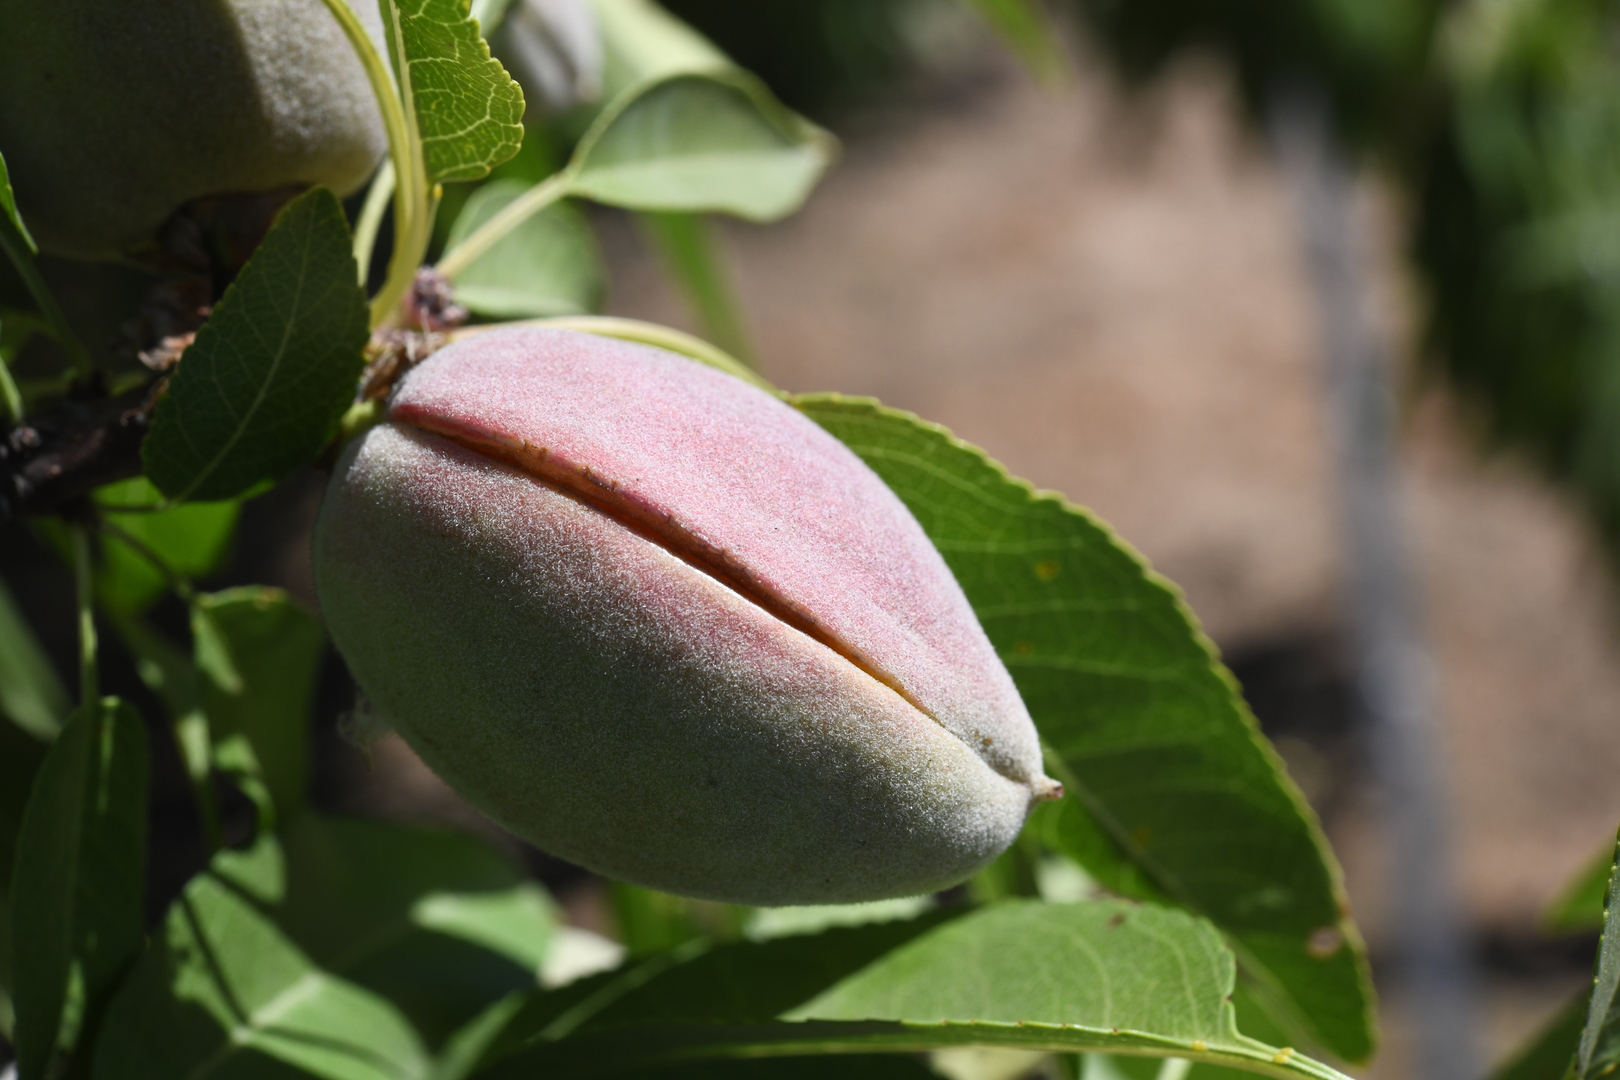 Almond growers prepare for 2023 hull split